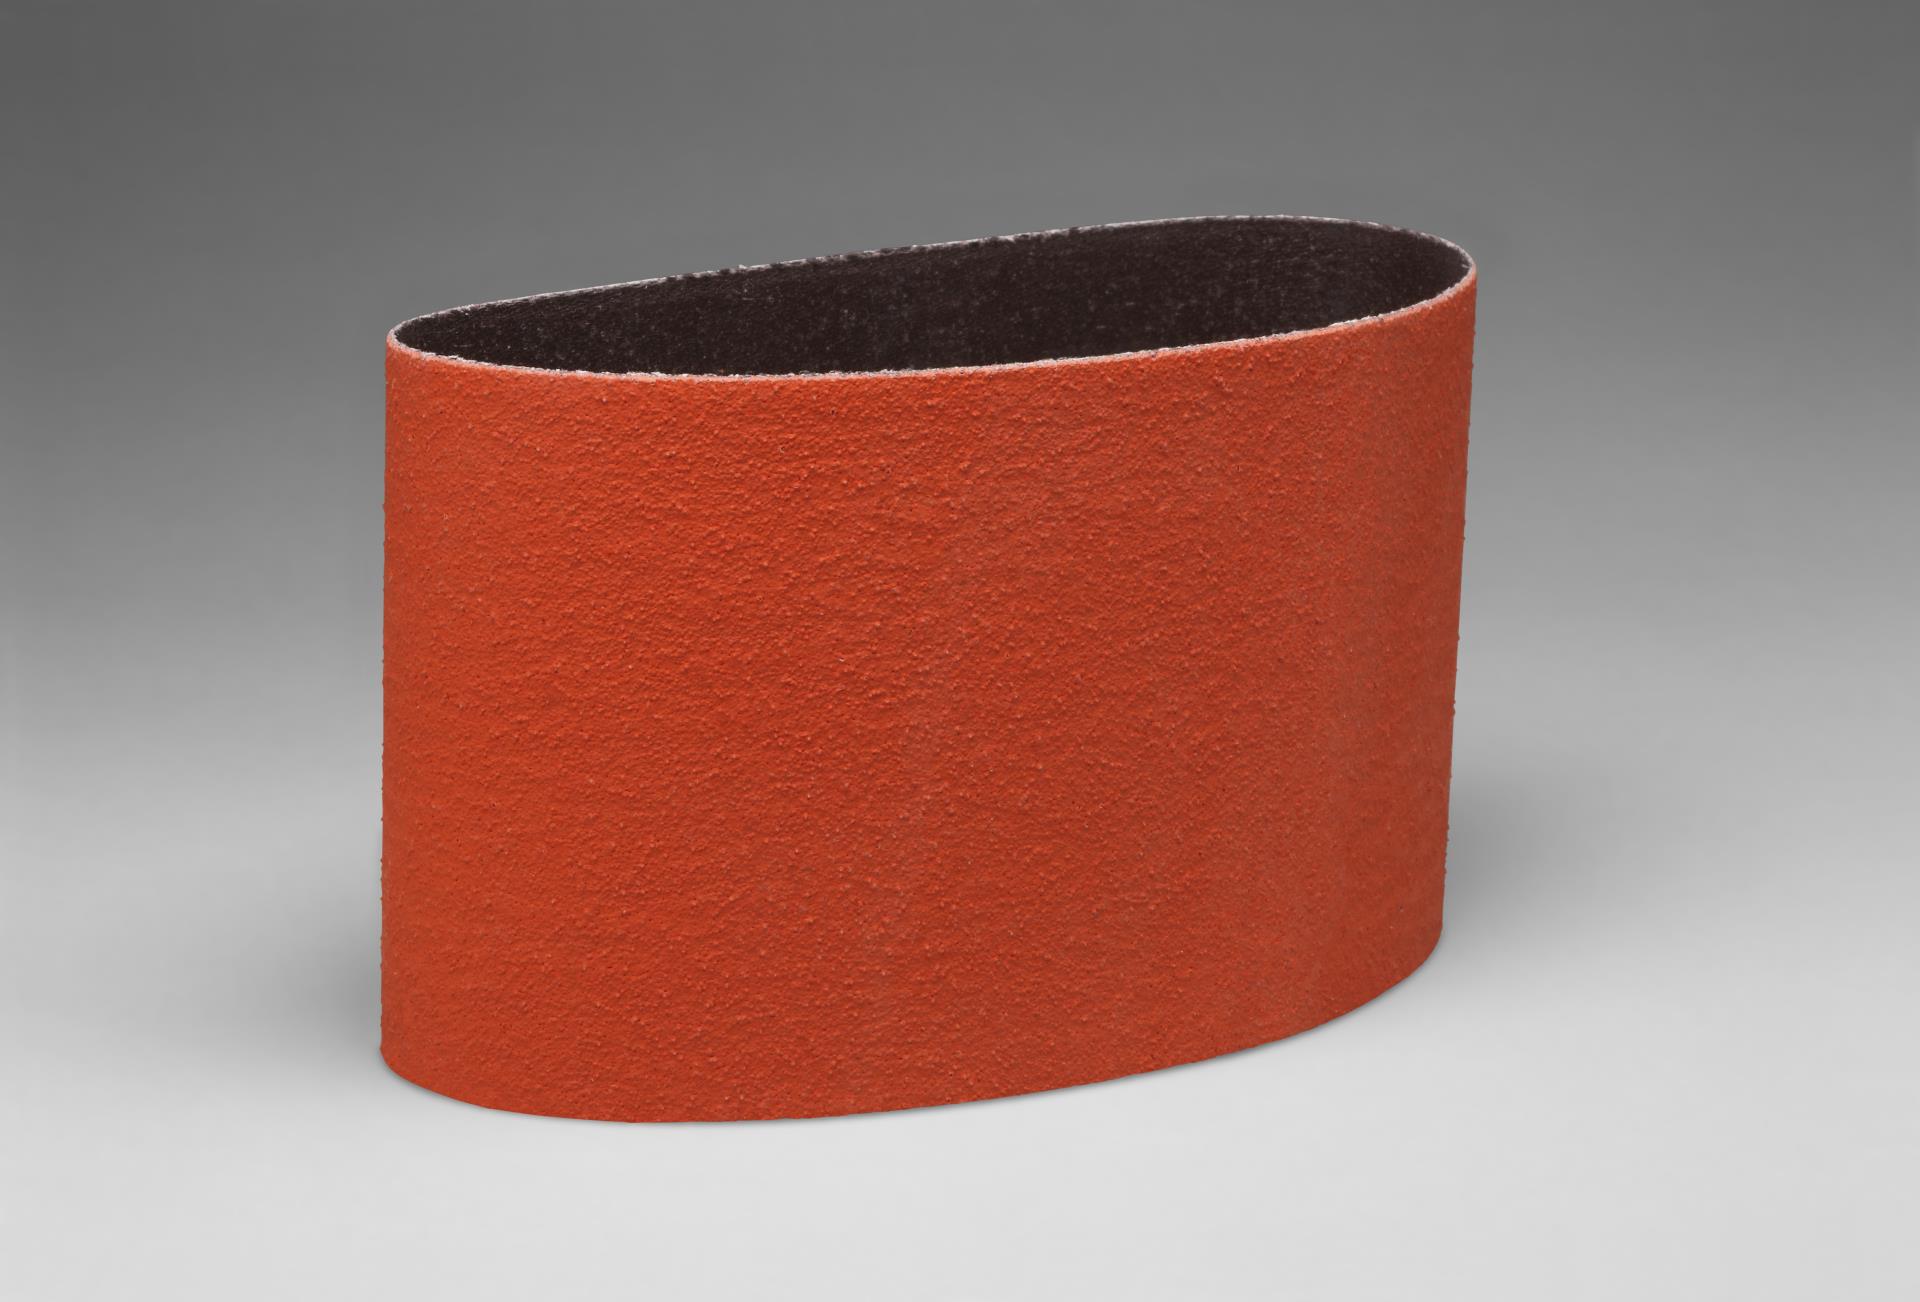 Cloth Belt 777F 1//2 Width x 24 Length Orange 80 Grit 3M TM Wet//Dry Pack of 200 Ceramic Grain